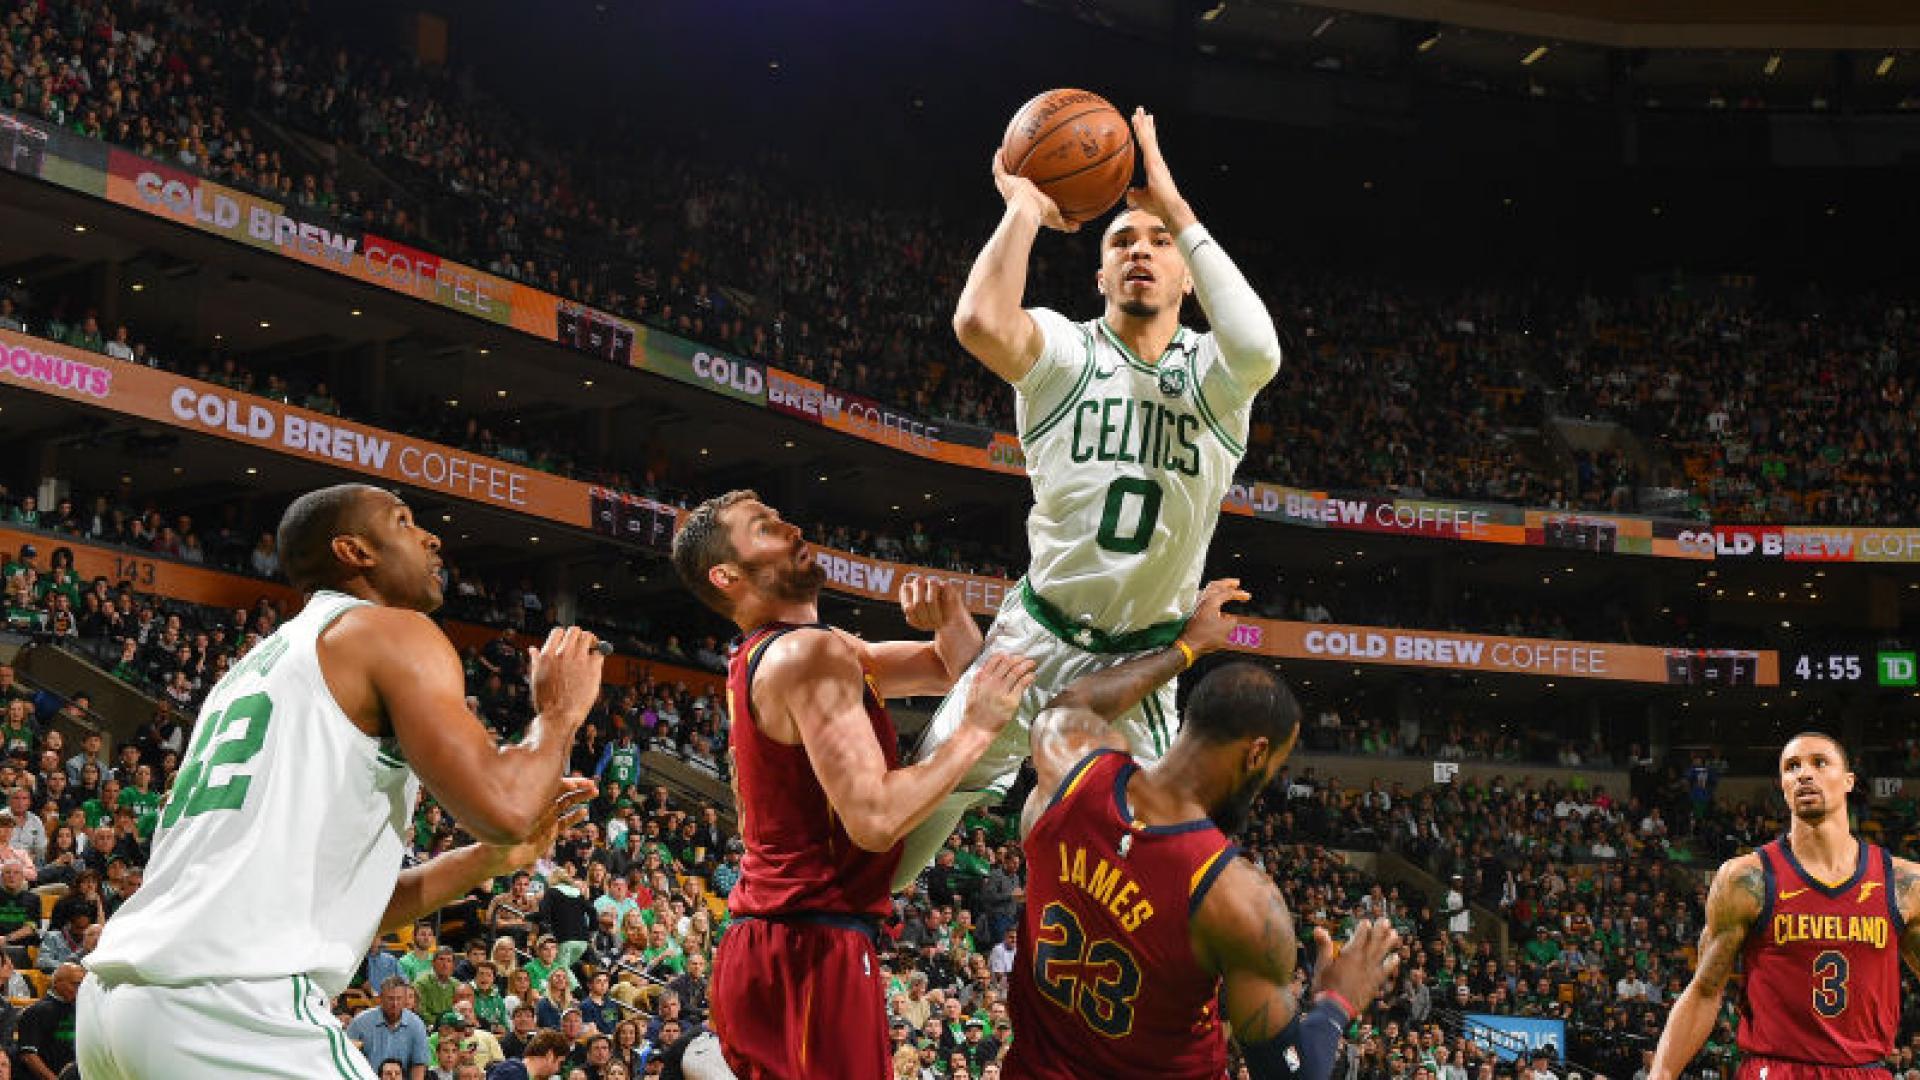 Podcast: NBA Report - Conference Finals, Celtics stomp Cavs in Game 1, Warriors vs Rockets (05-14-18)